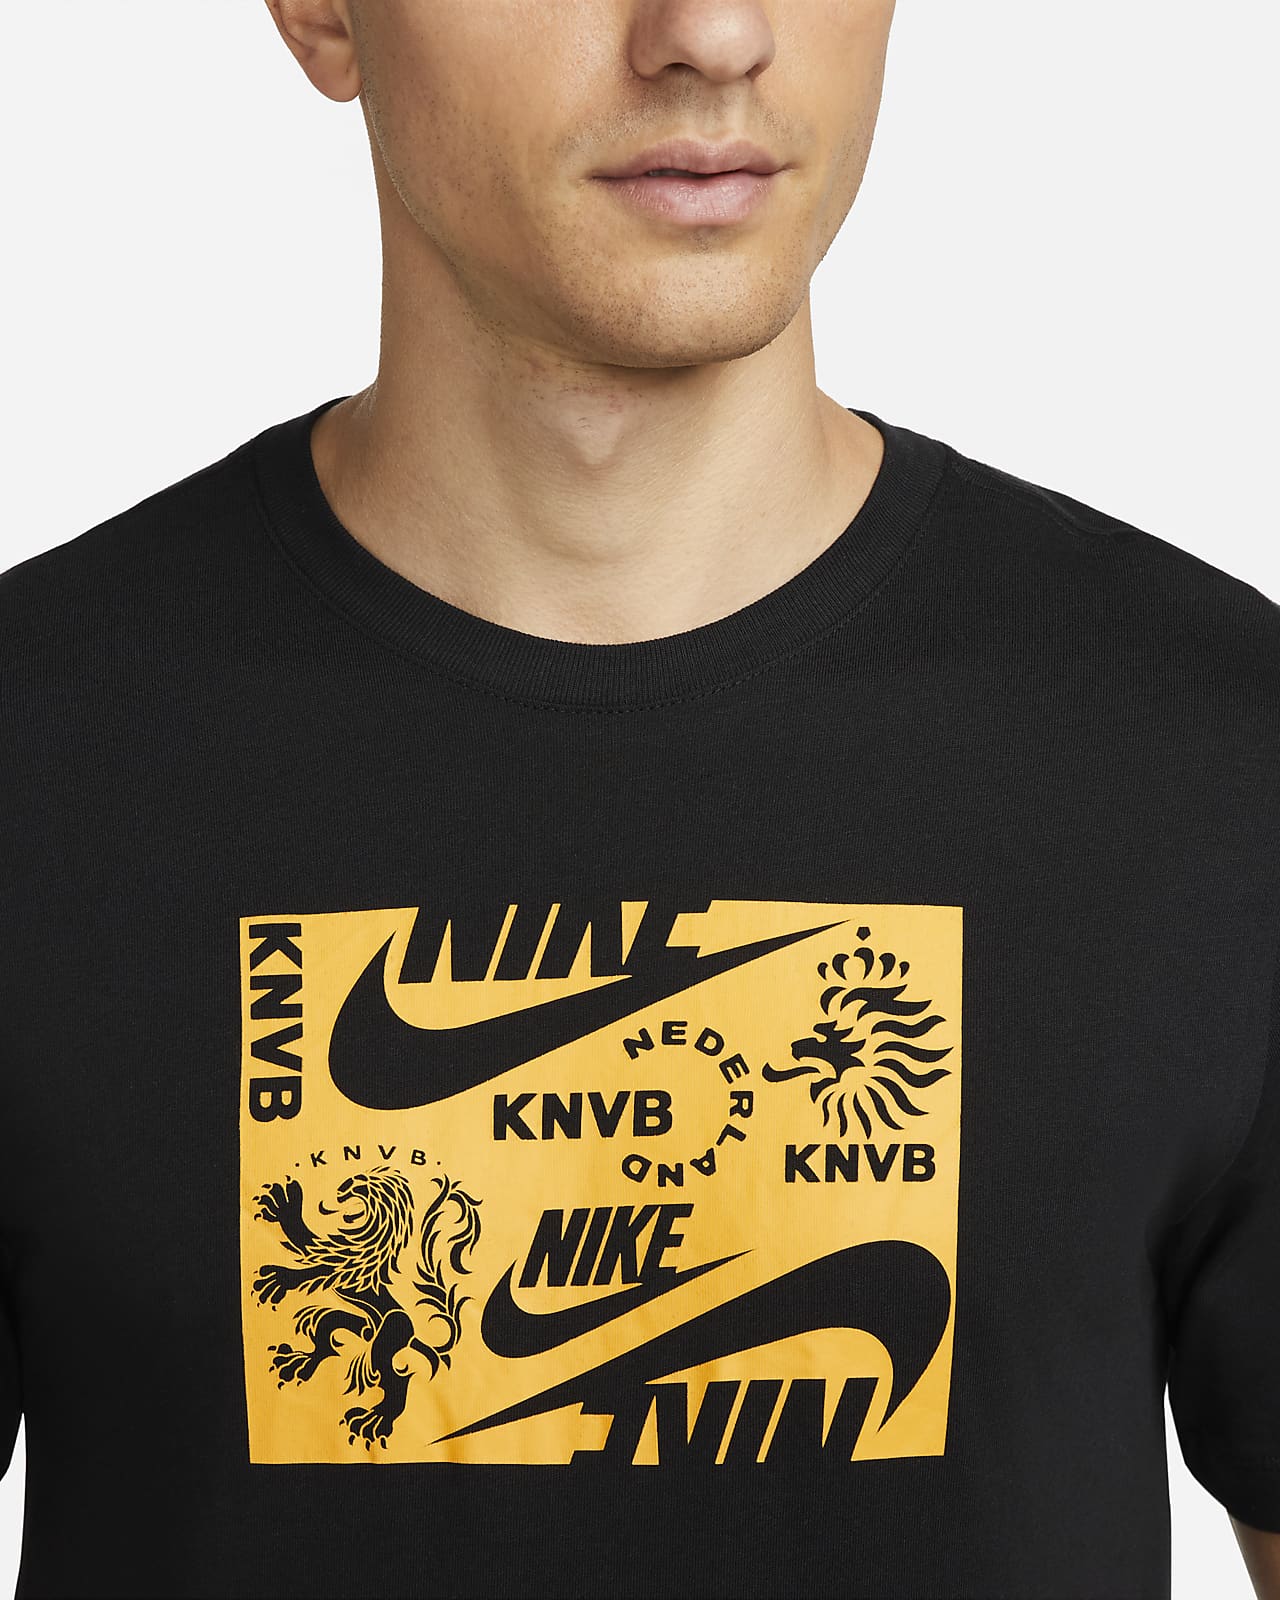 Shaded hår Politistation Netherlands Men's Graphic T-Shirt. Nike.com